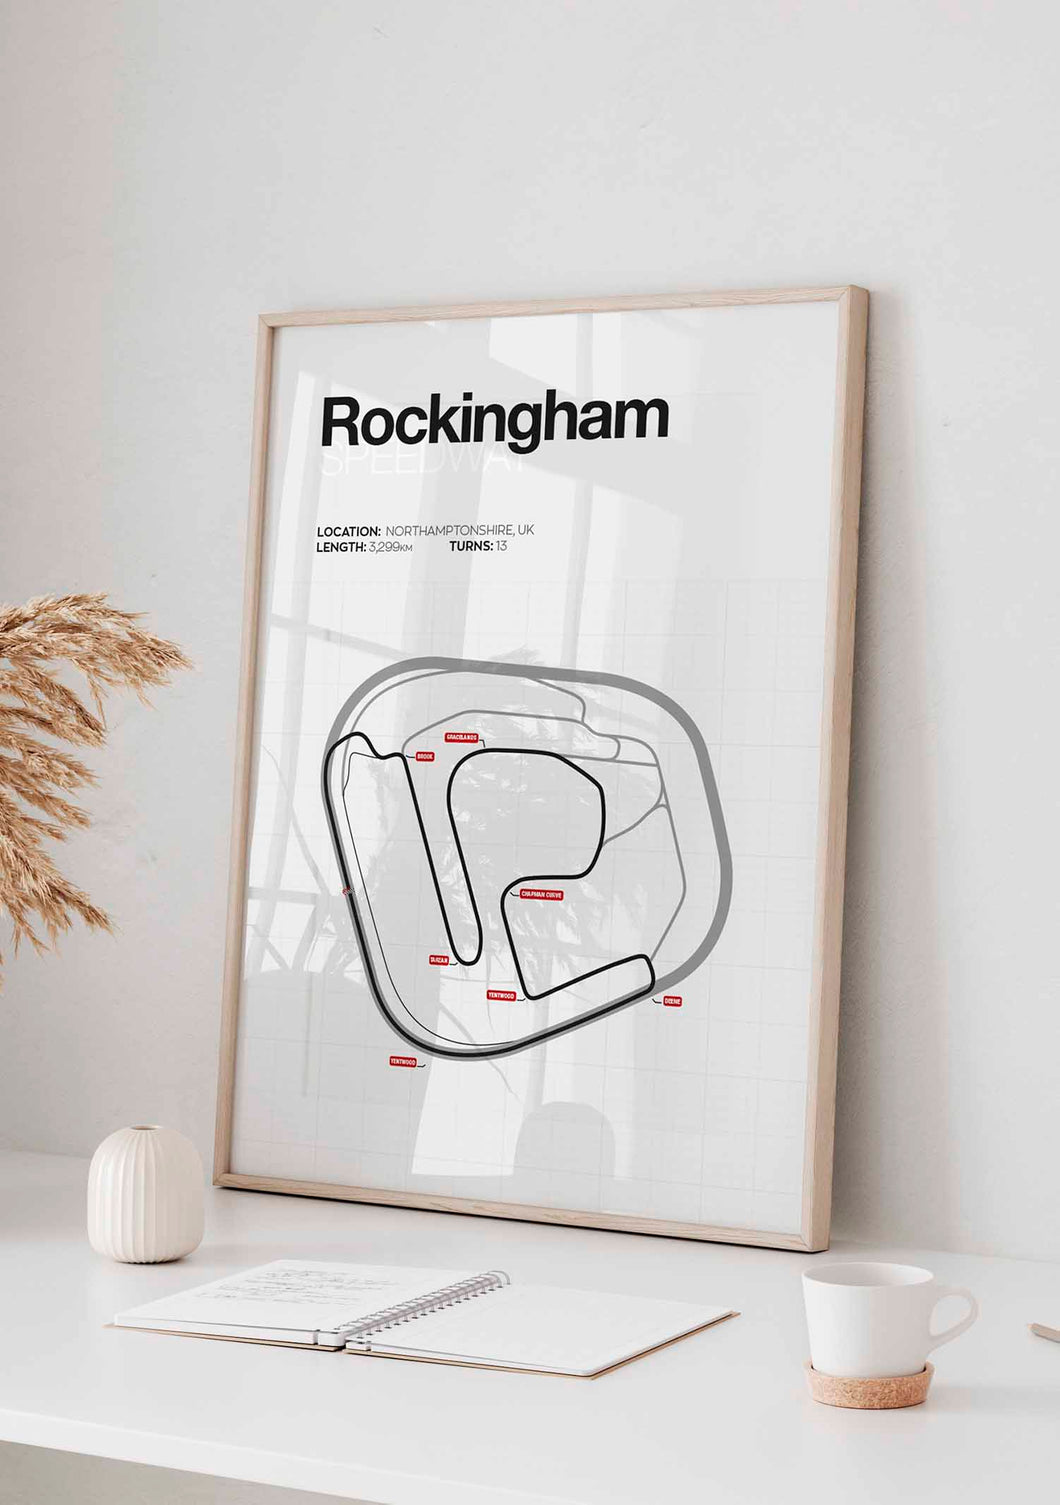 Rockingham